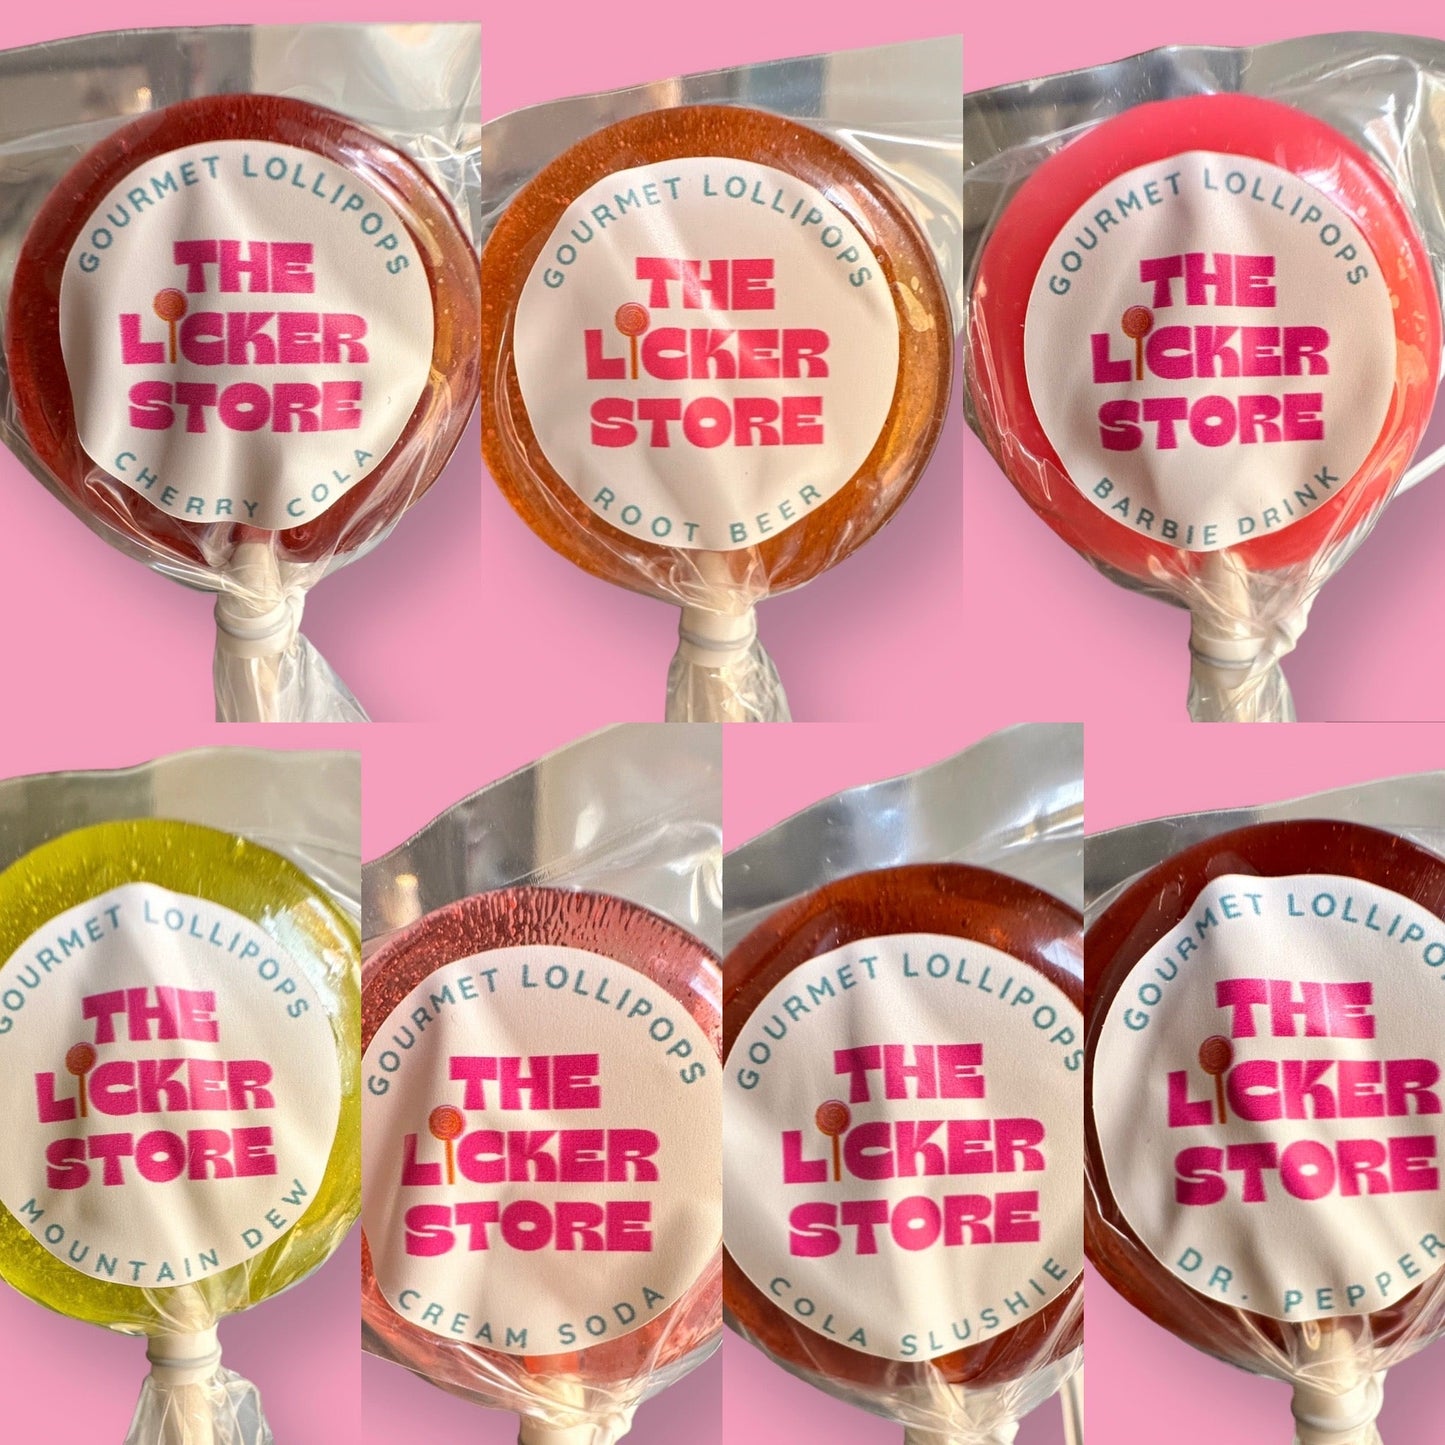 The Licker Store Gourmet Lollipops